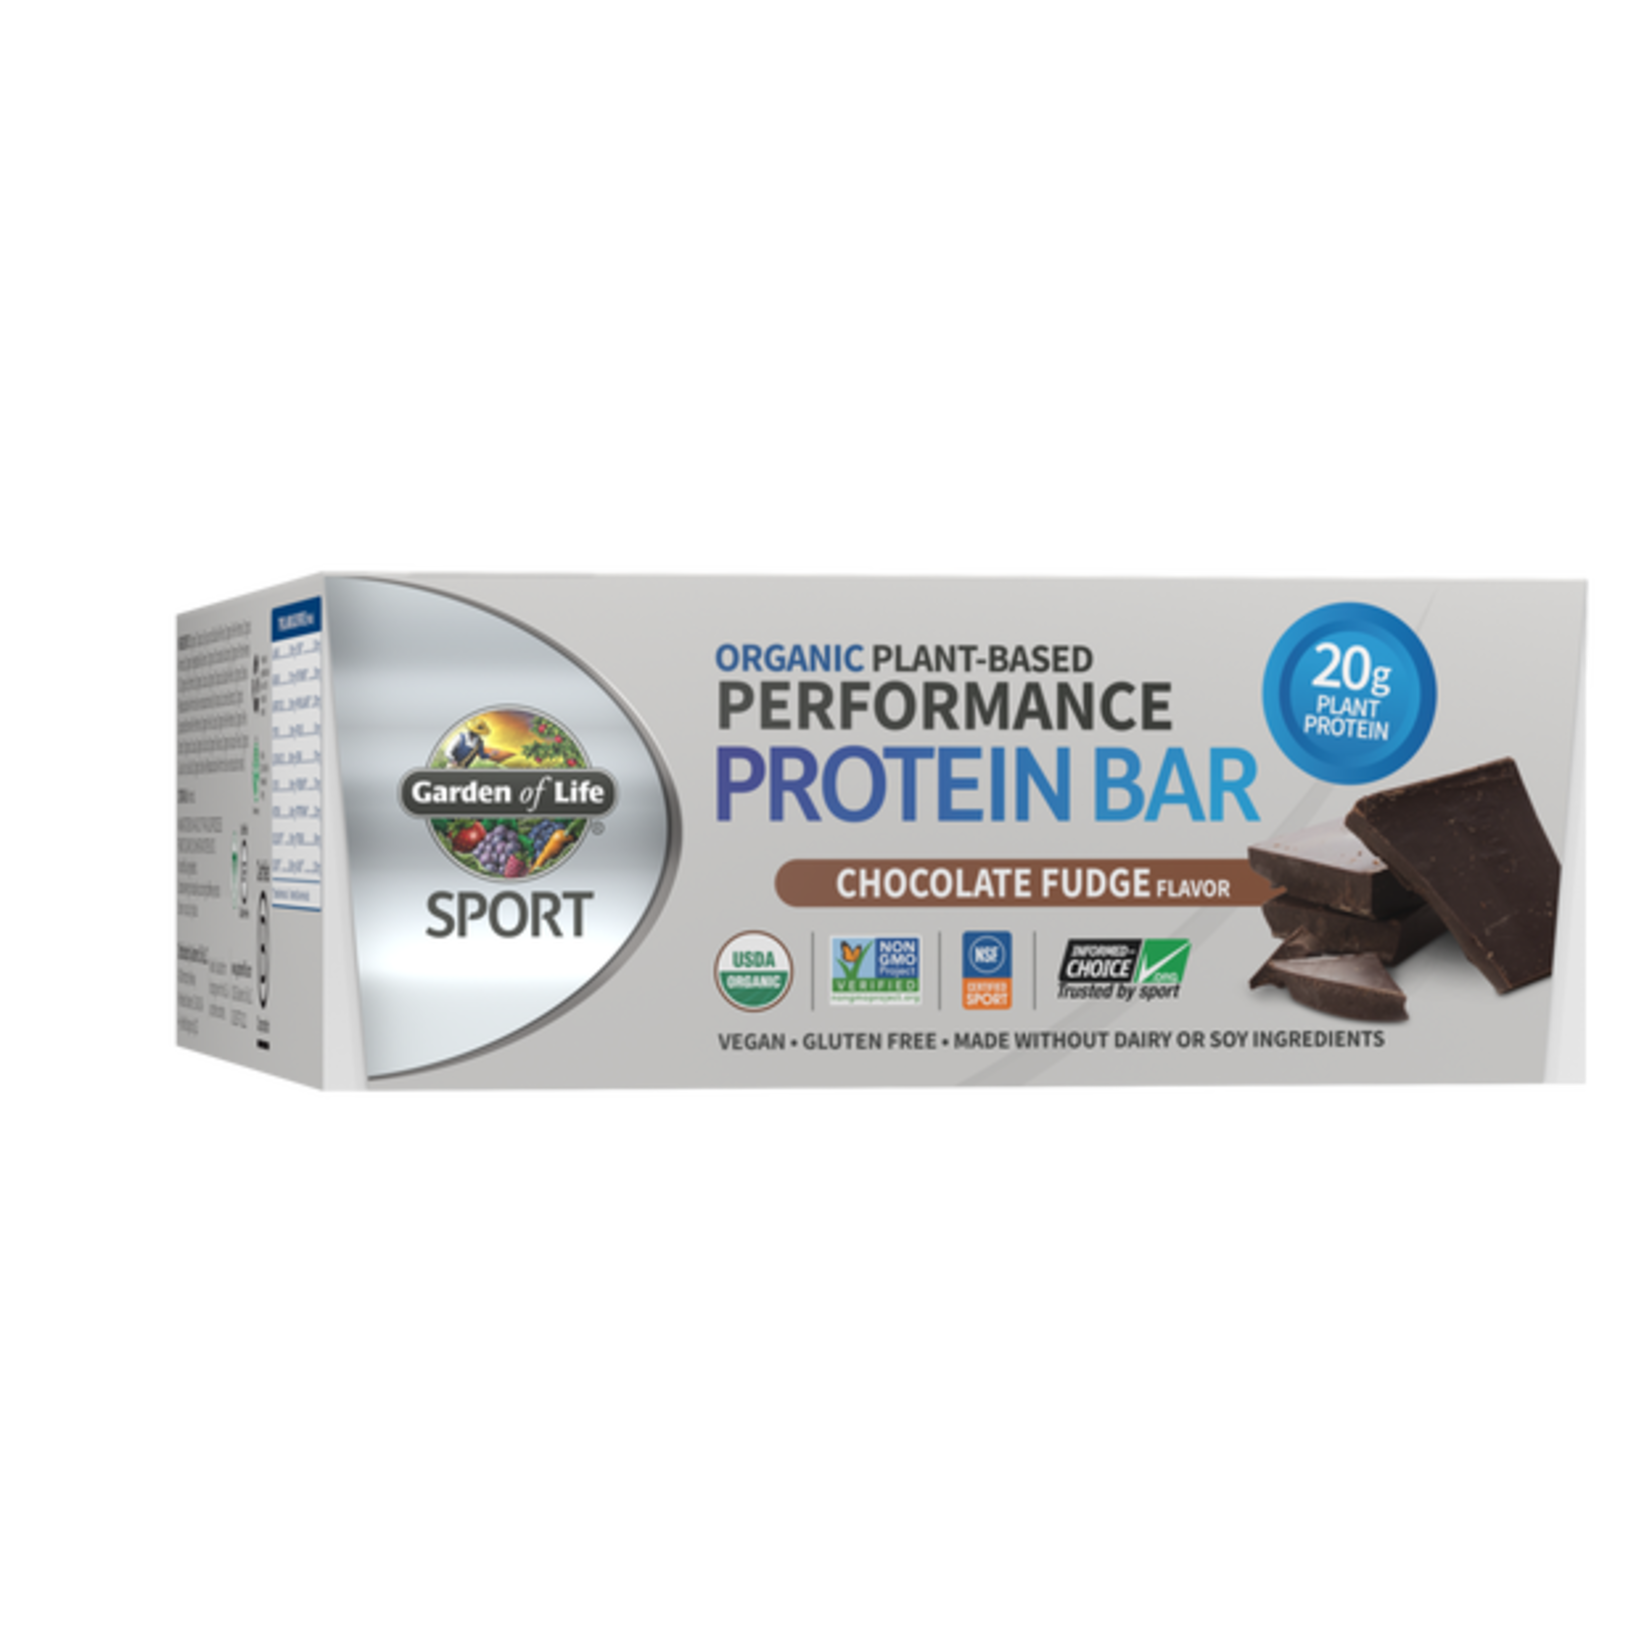 Garden of Life Garden of Life - Box of Sport Organic Plant Based Protein Bar Chocolate Fudge - 12 Bars